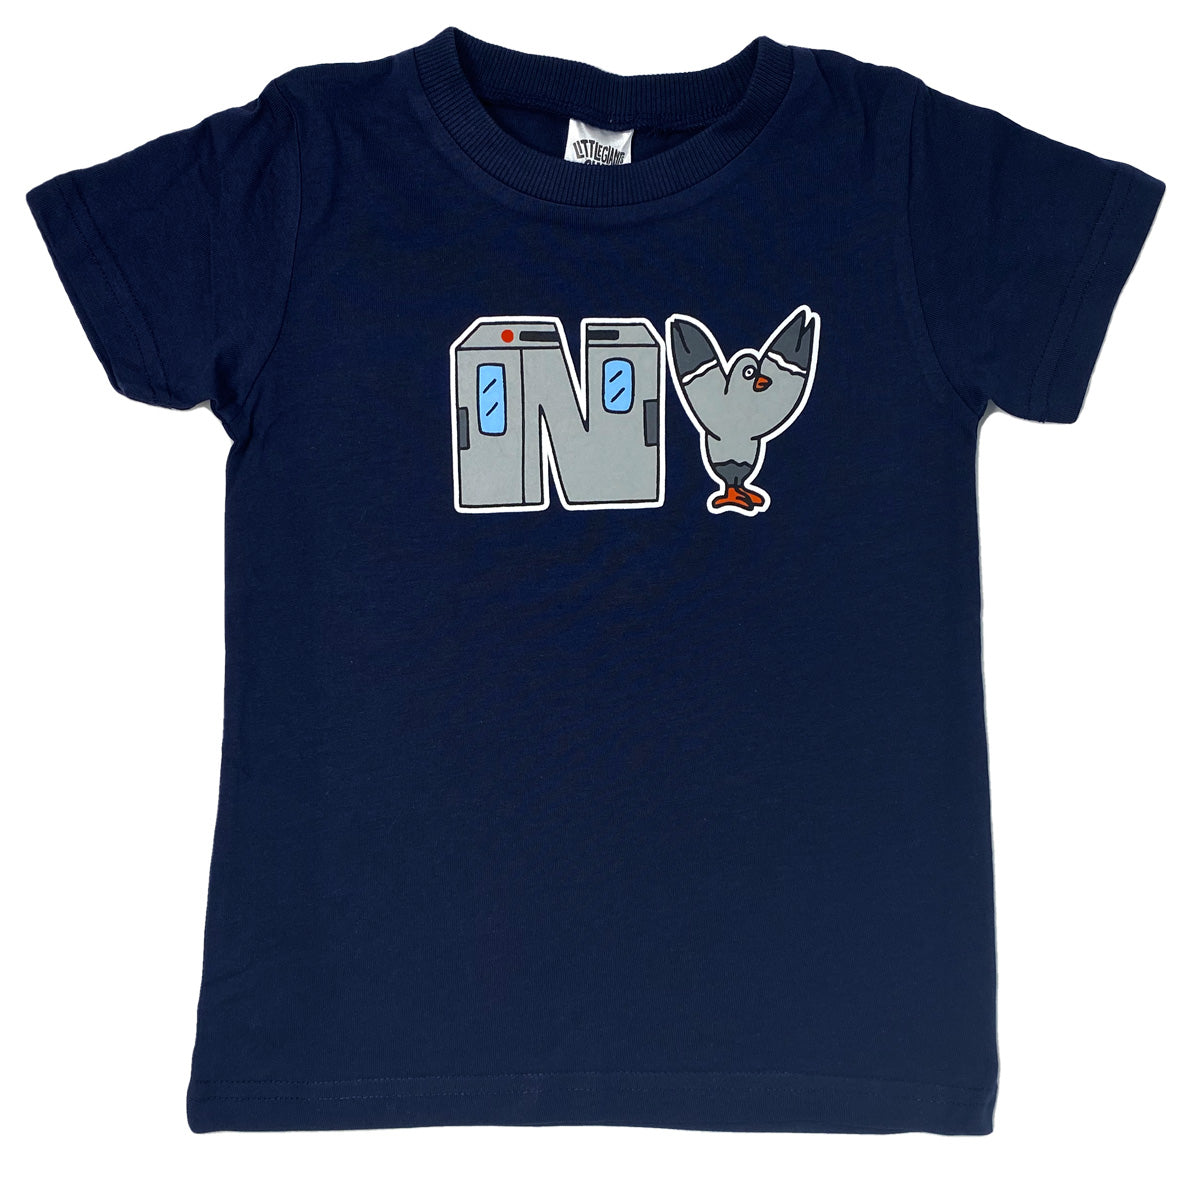 N.Y. T-Shirt (Navy)